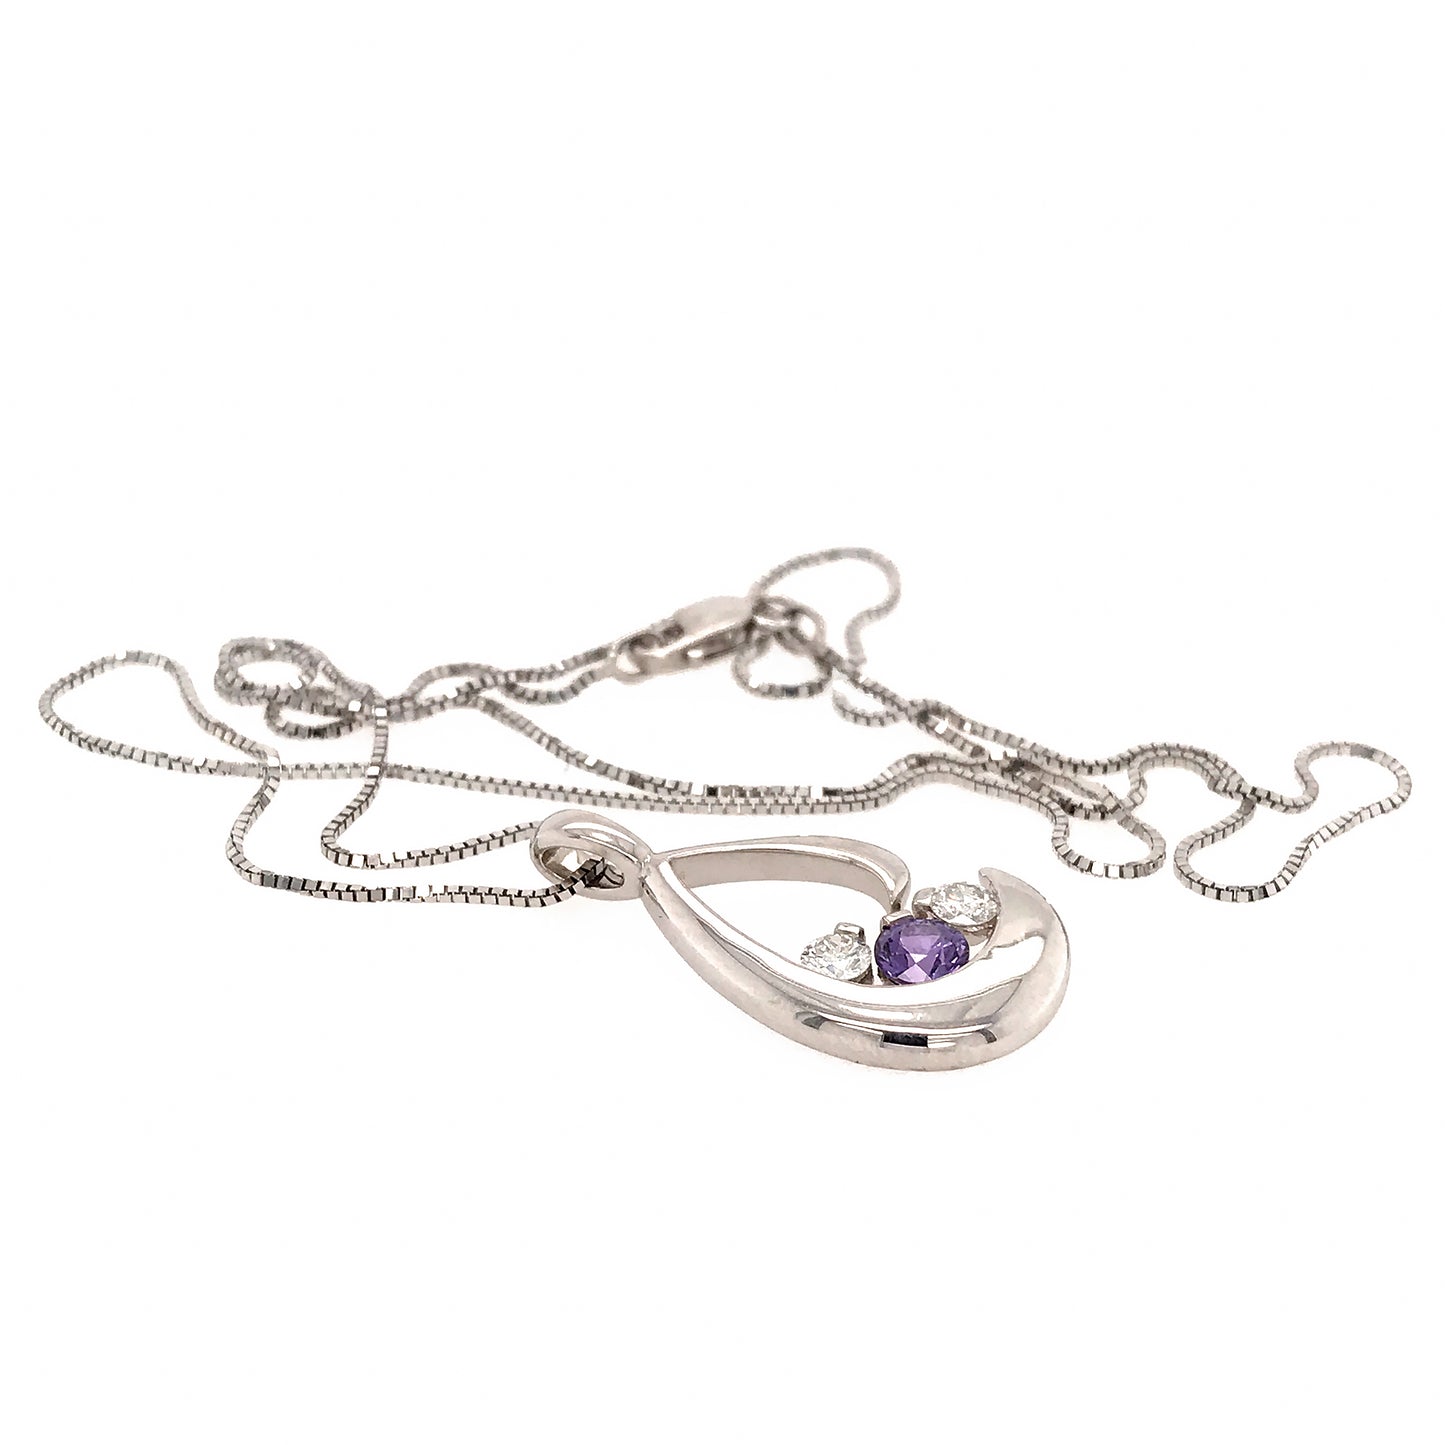 14k White Gold Lavender Sapphire and Diamond Pendant Necklace